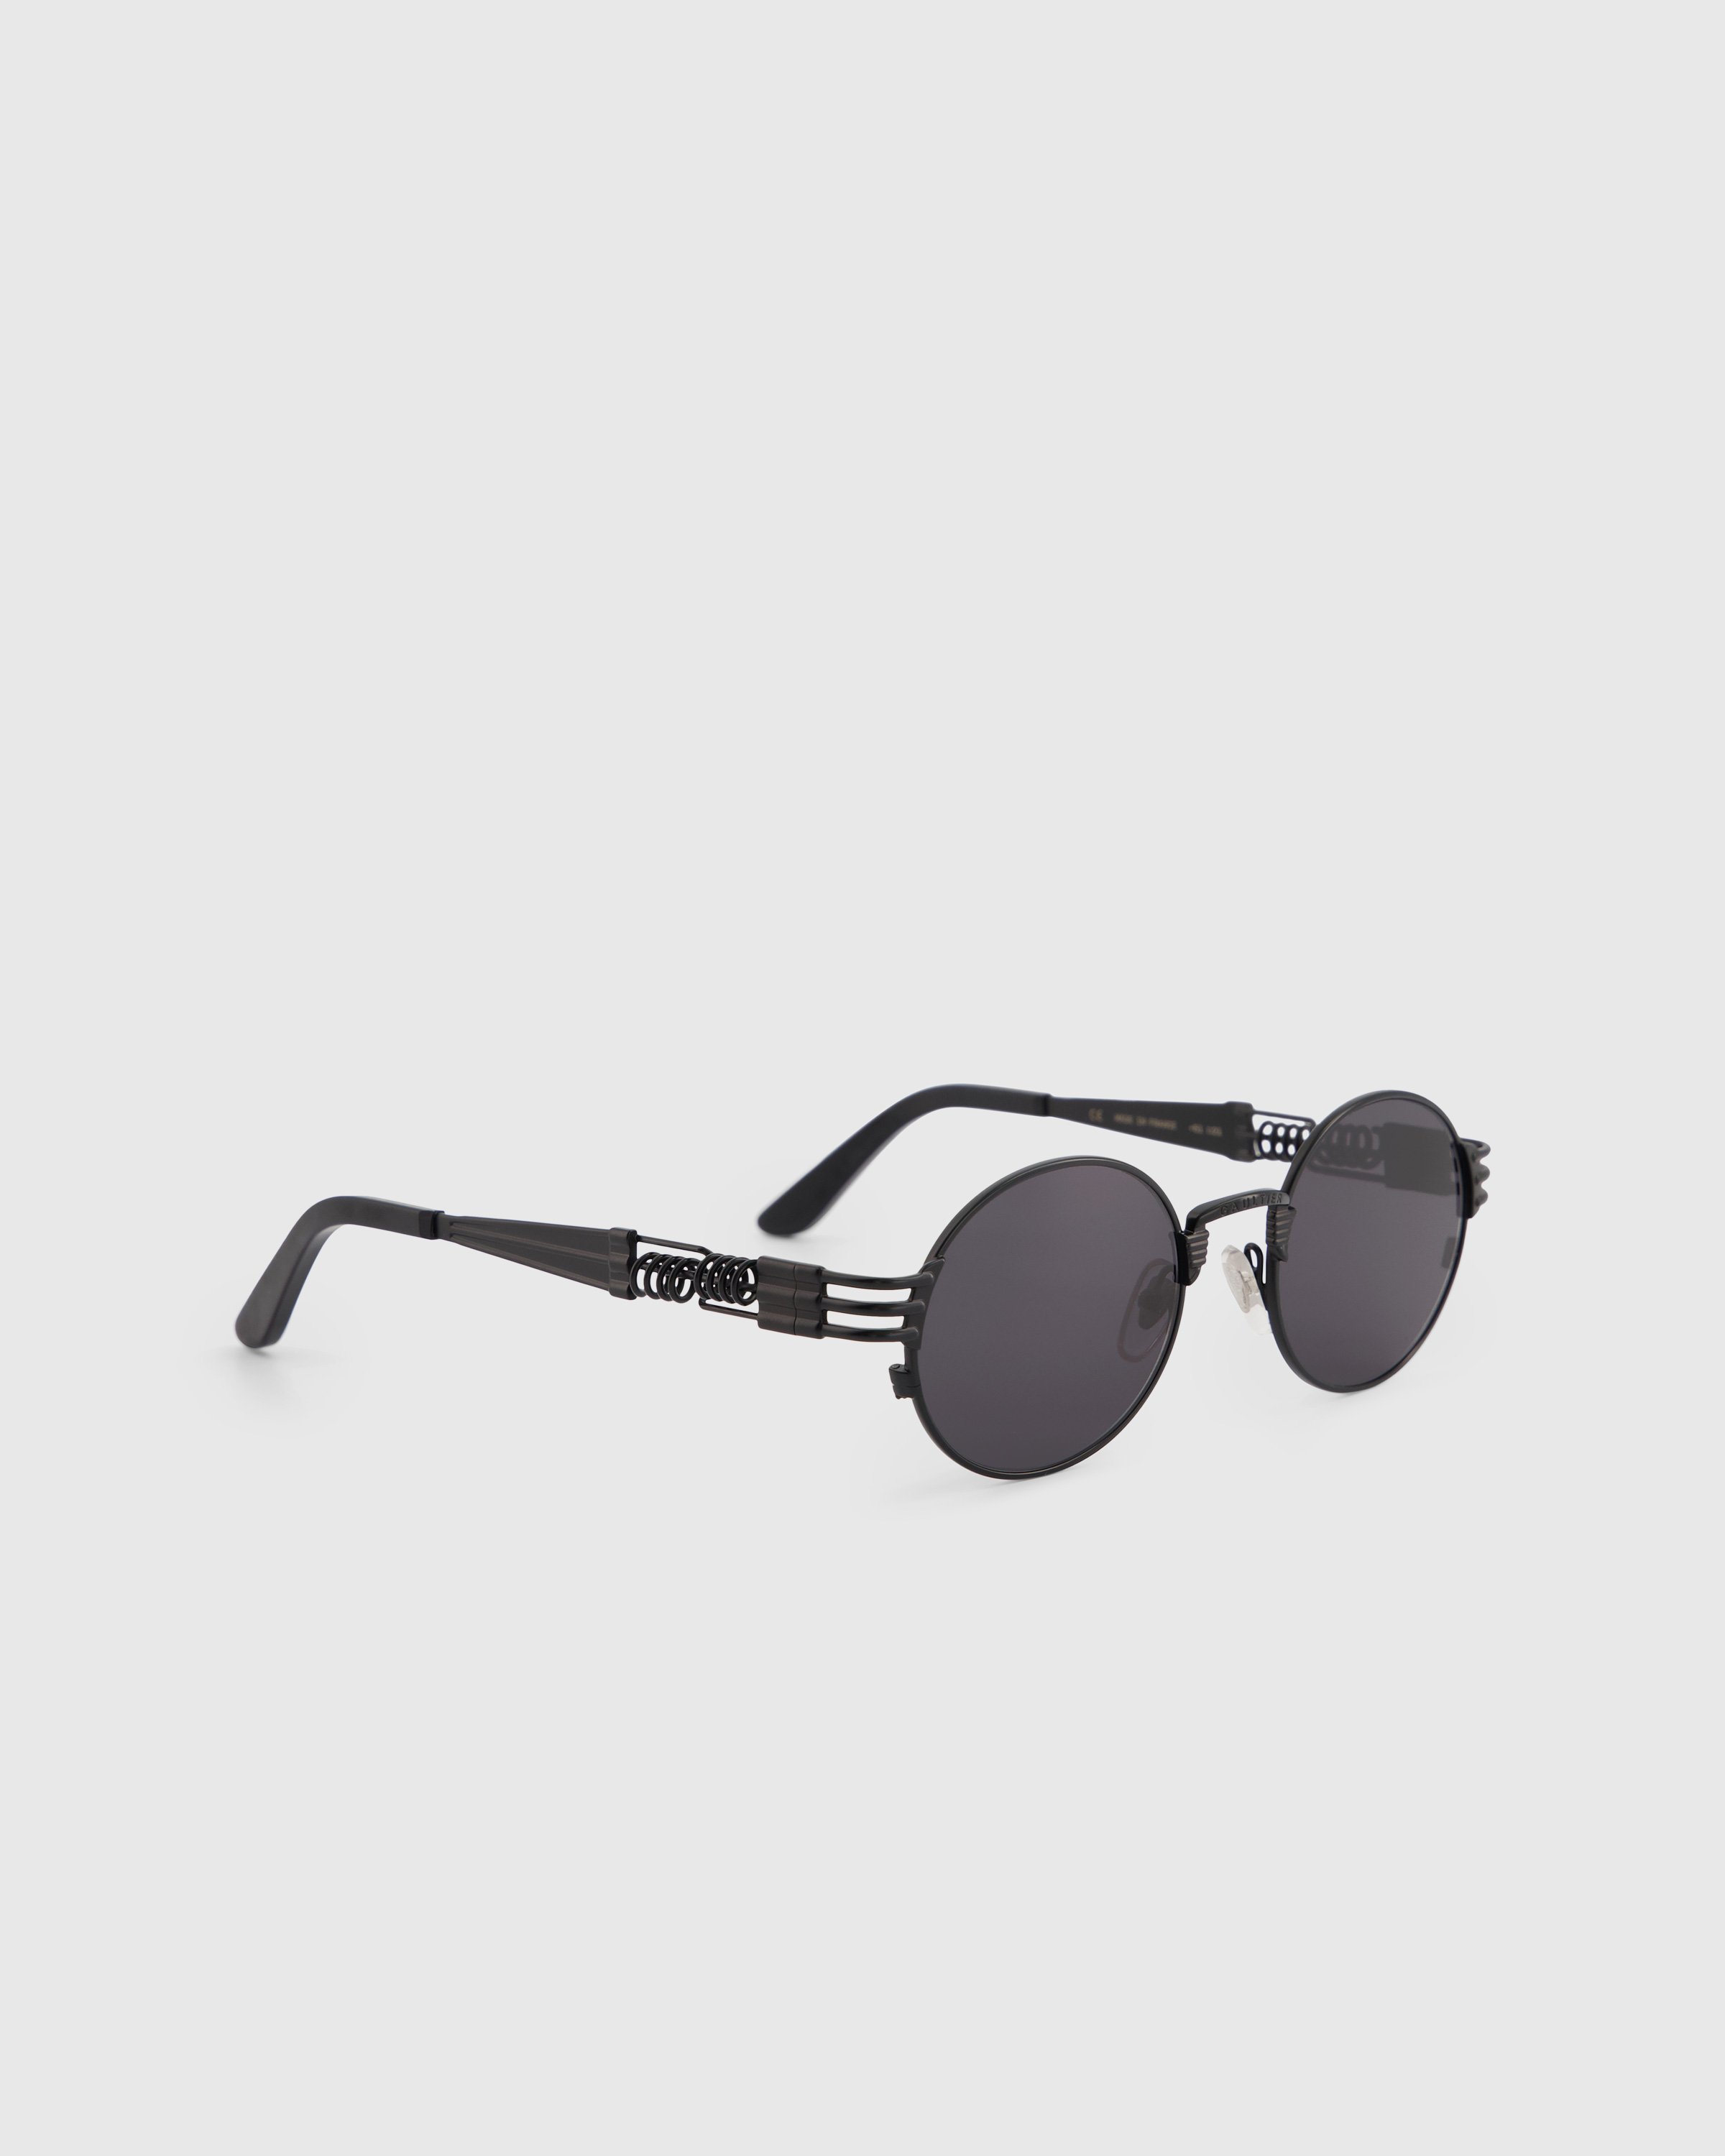 Jean Paul Gaultier x Burna Boy - 56-6106 Double Resort Sunglasses Black - Accessories - Black - Image 2